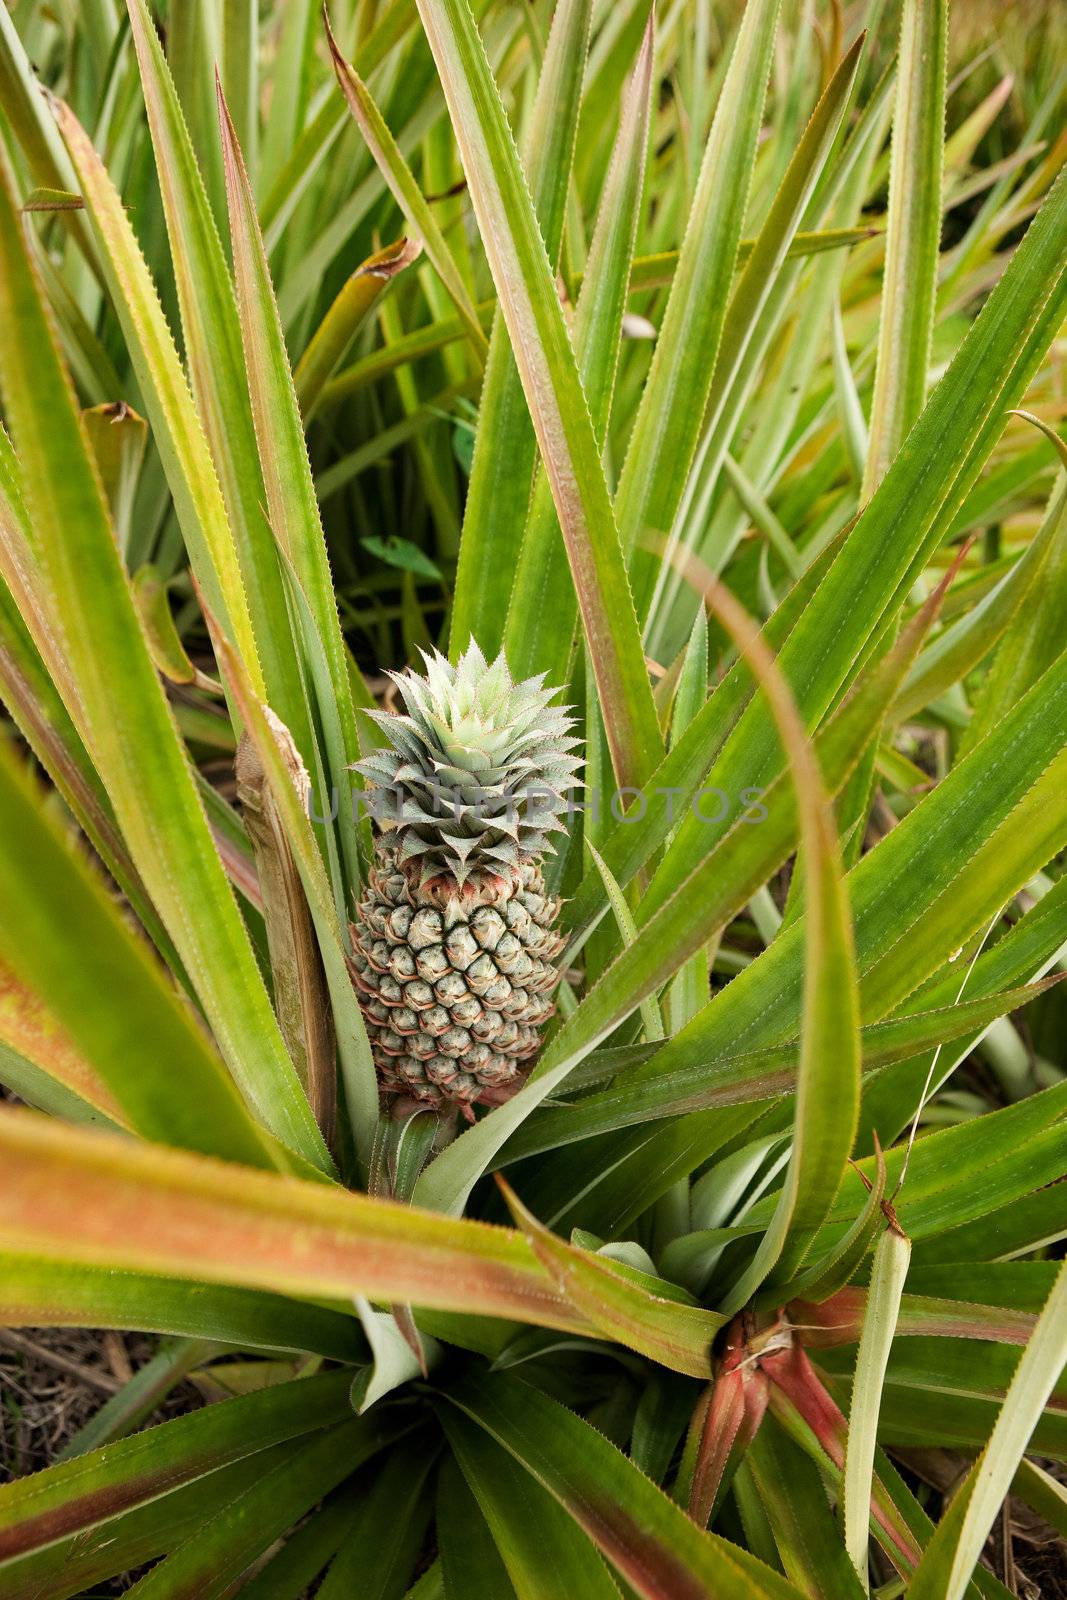 Growing Pineapple by leaf